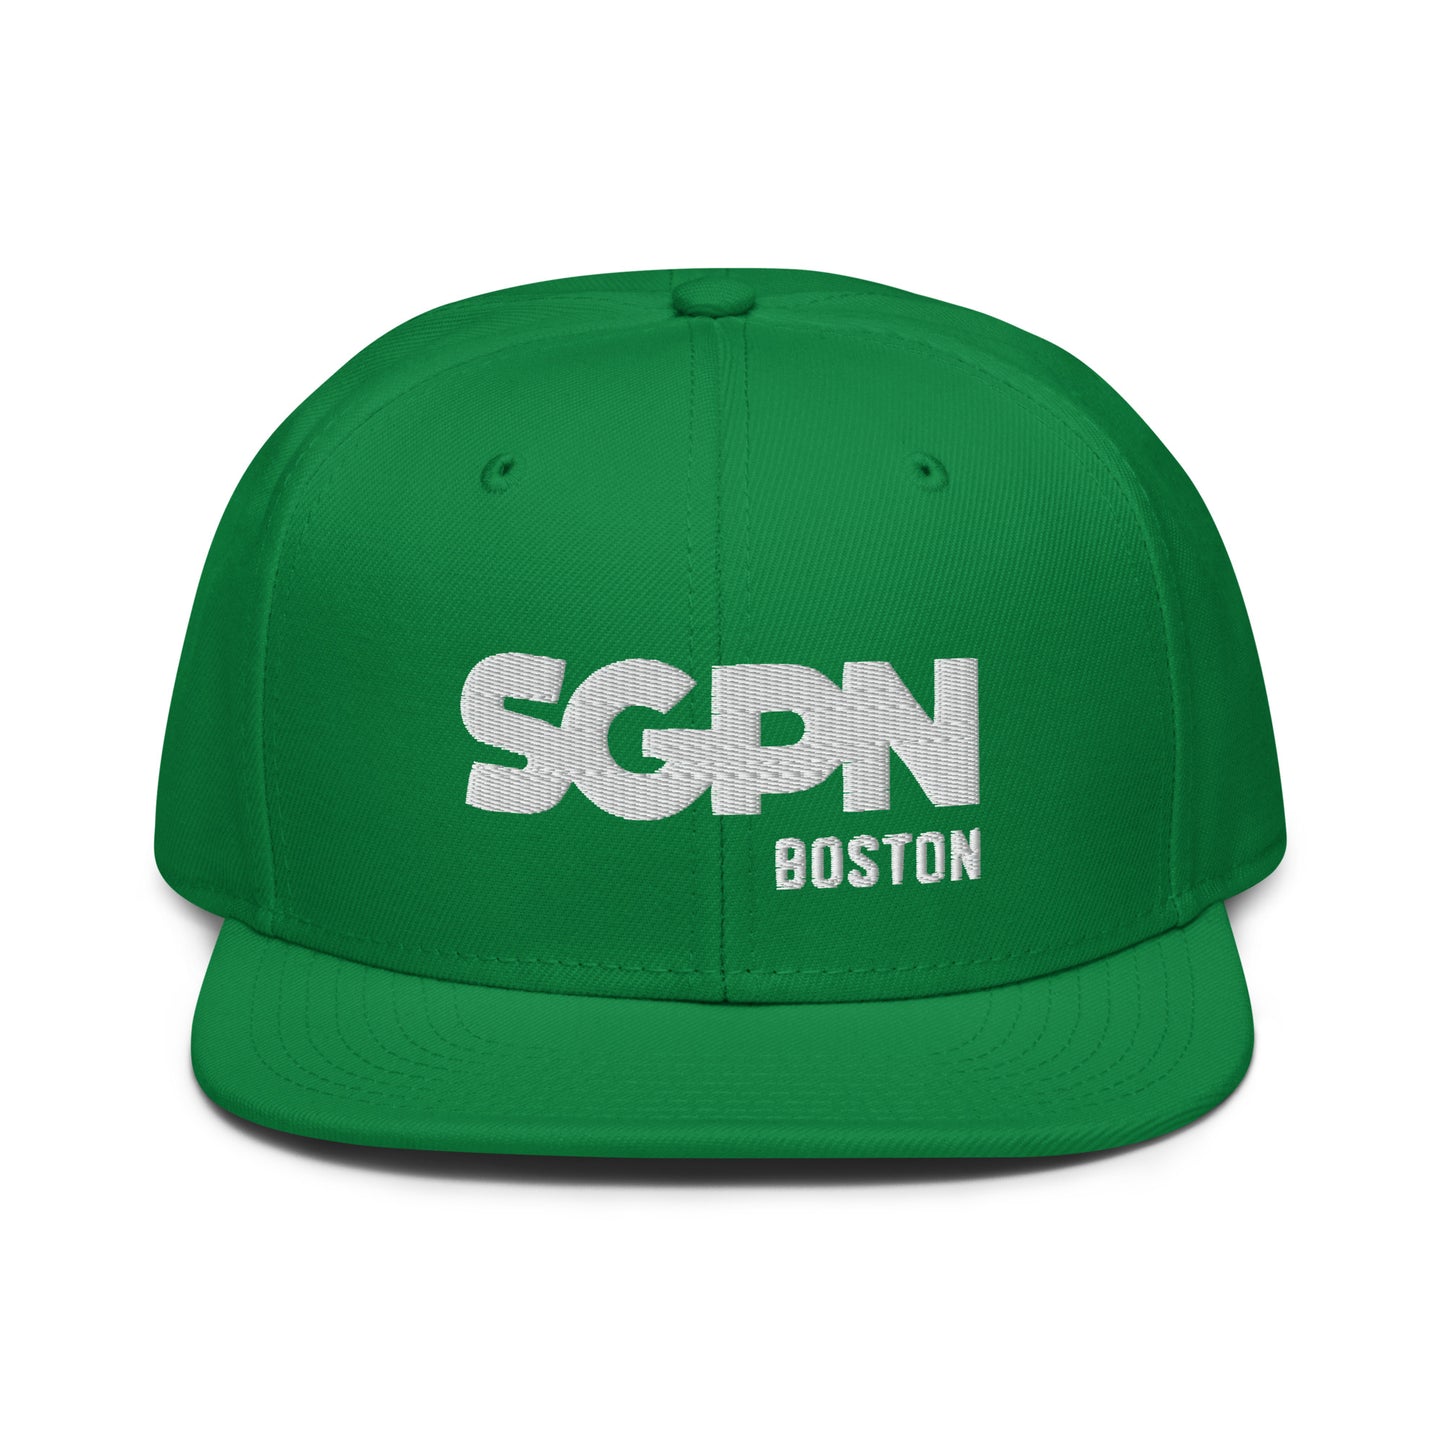 SGPN - Boston edition - Snapback Hat